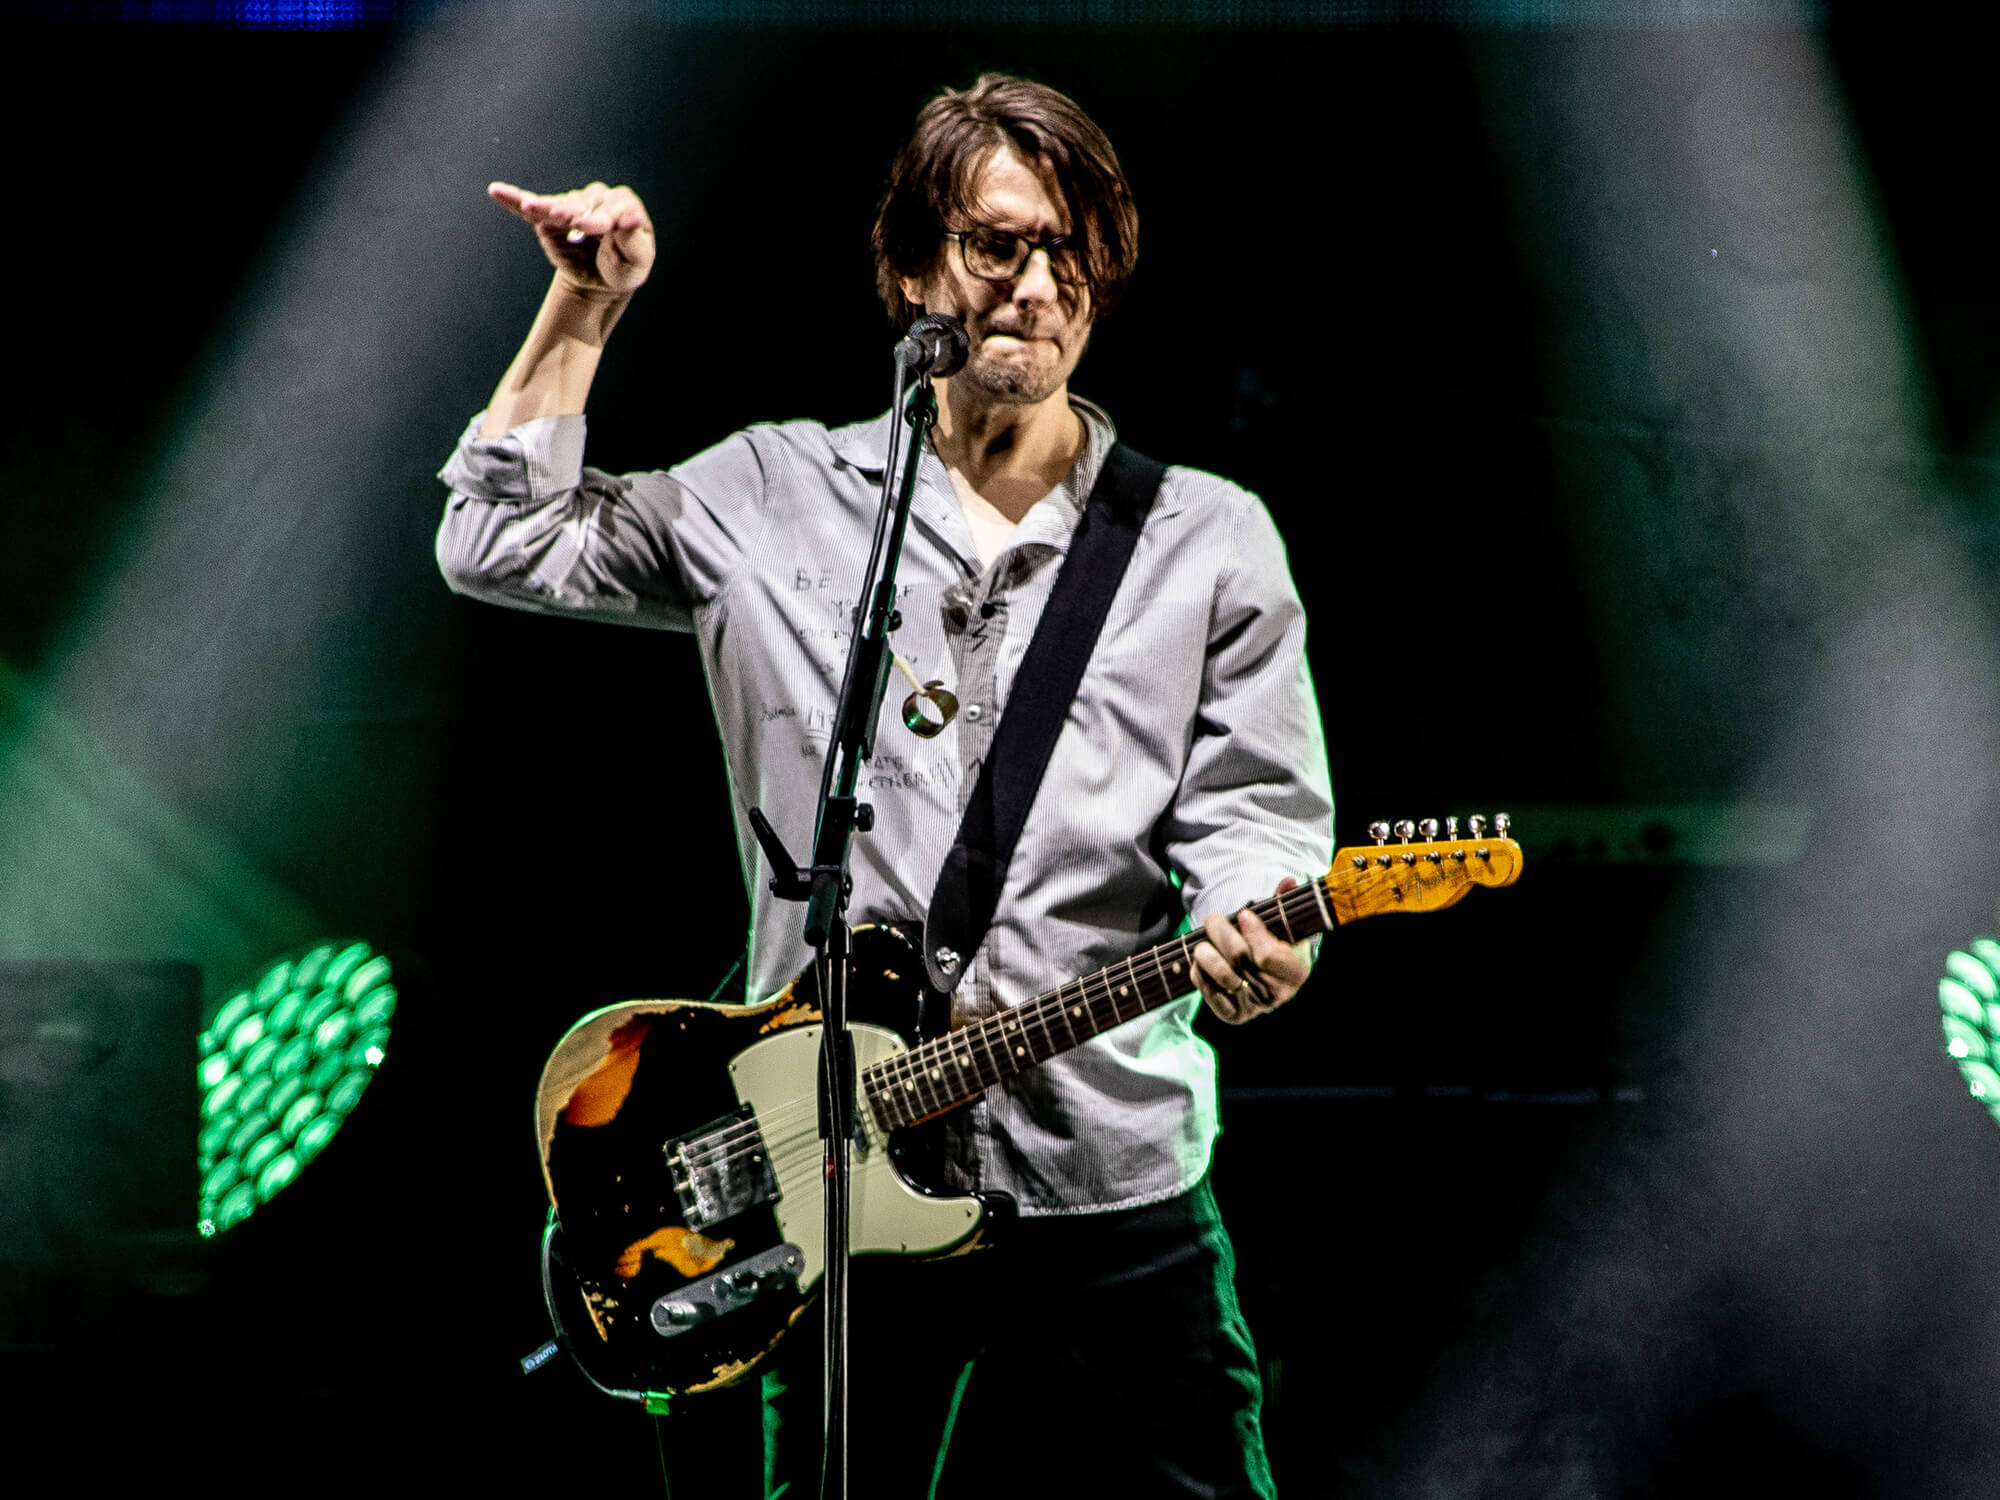 Steven Wilson, lead singer and guitarist of Porcupine Tree